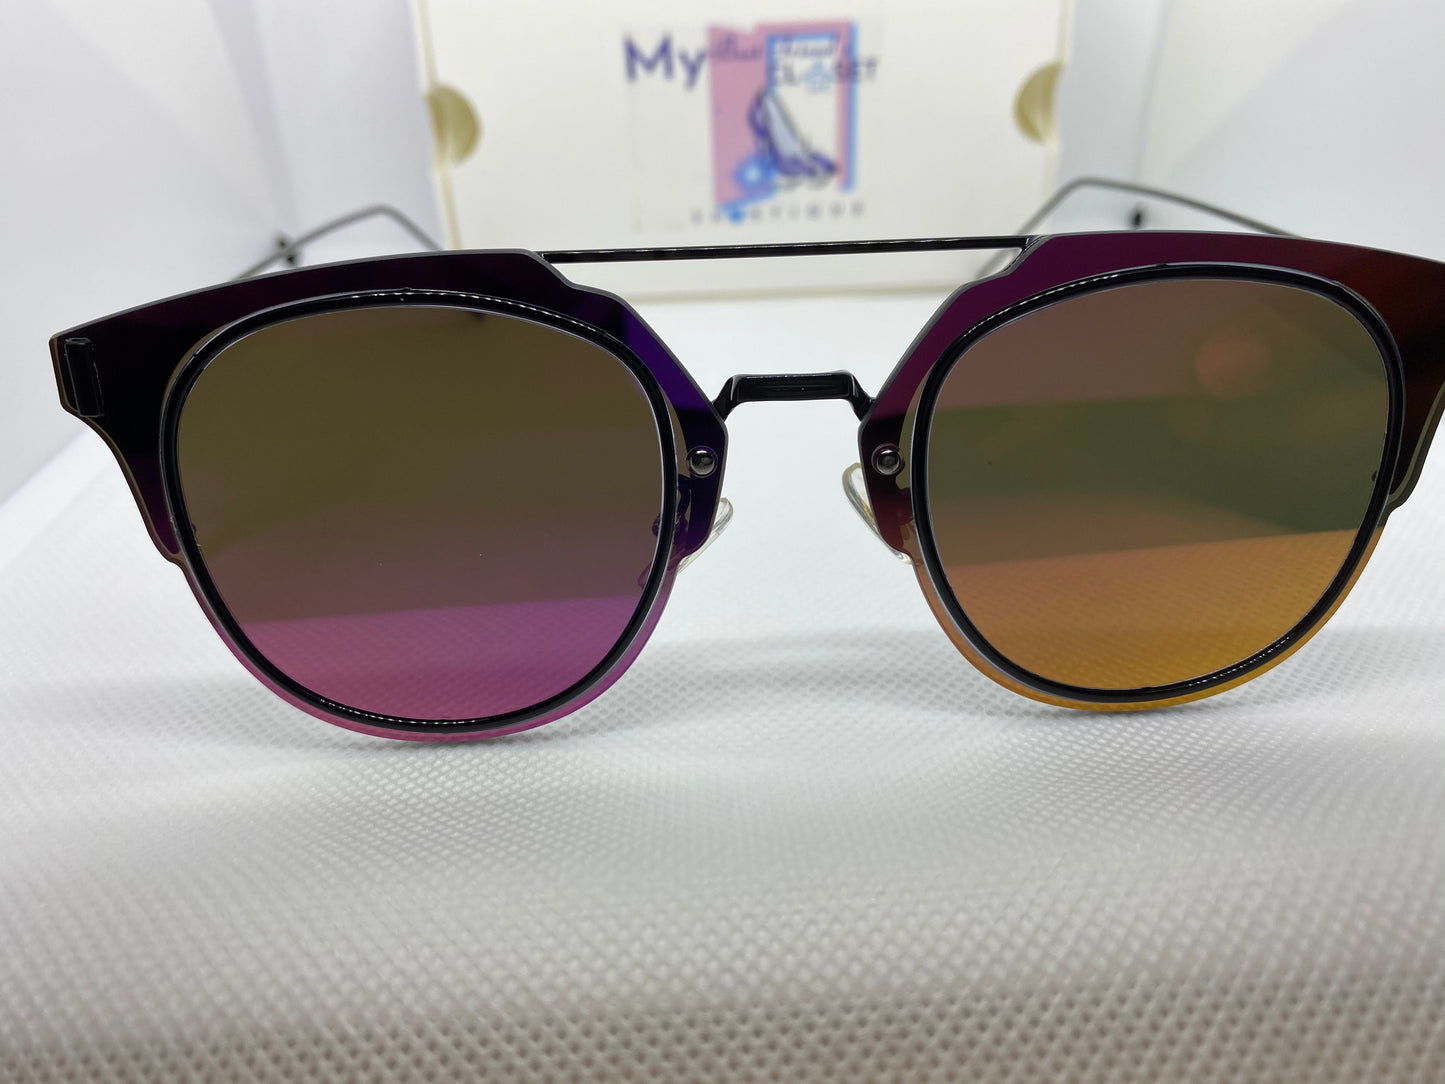 Shady AF sunglasses